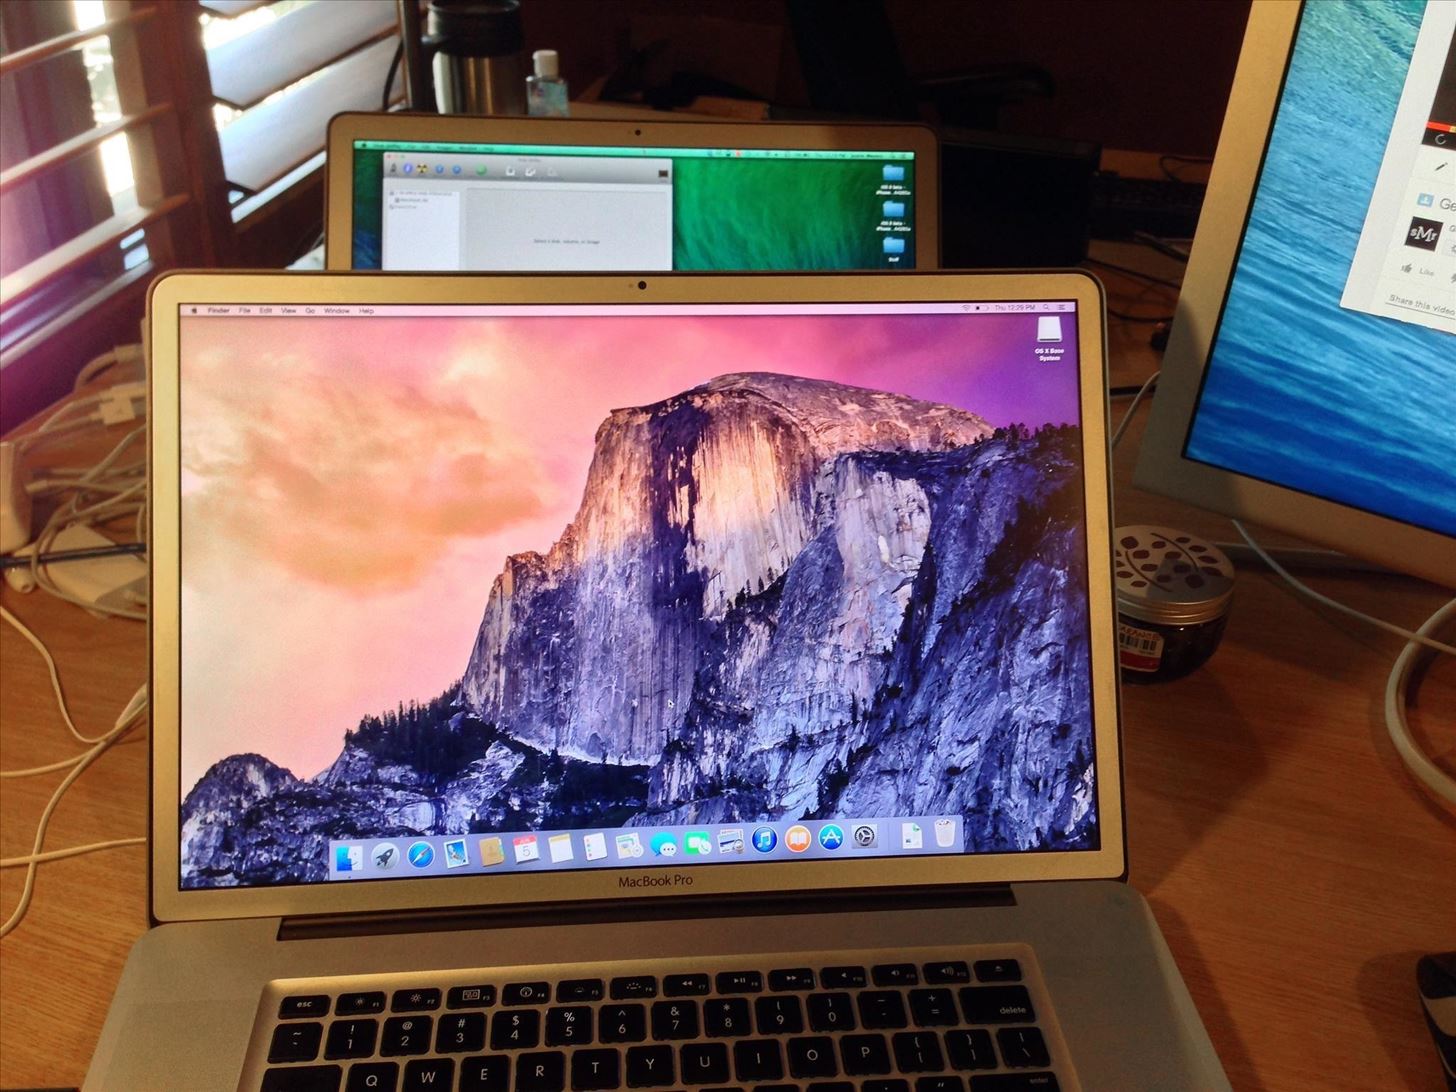 Comment créer un lecteur USB d'installation de Mac OS X 10.10 Yosemite